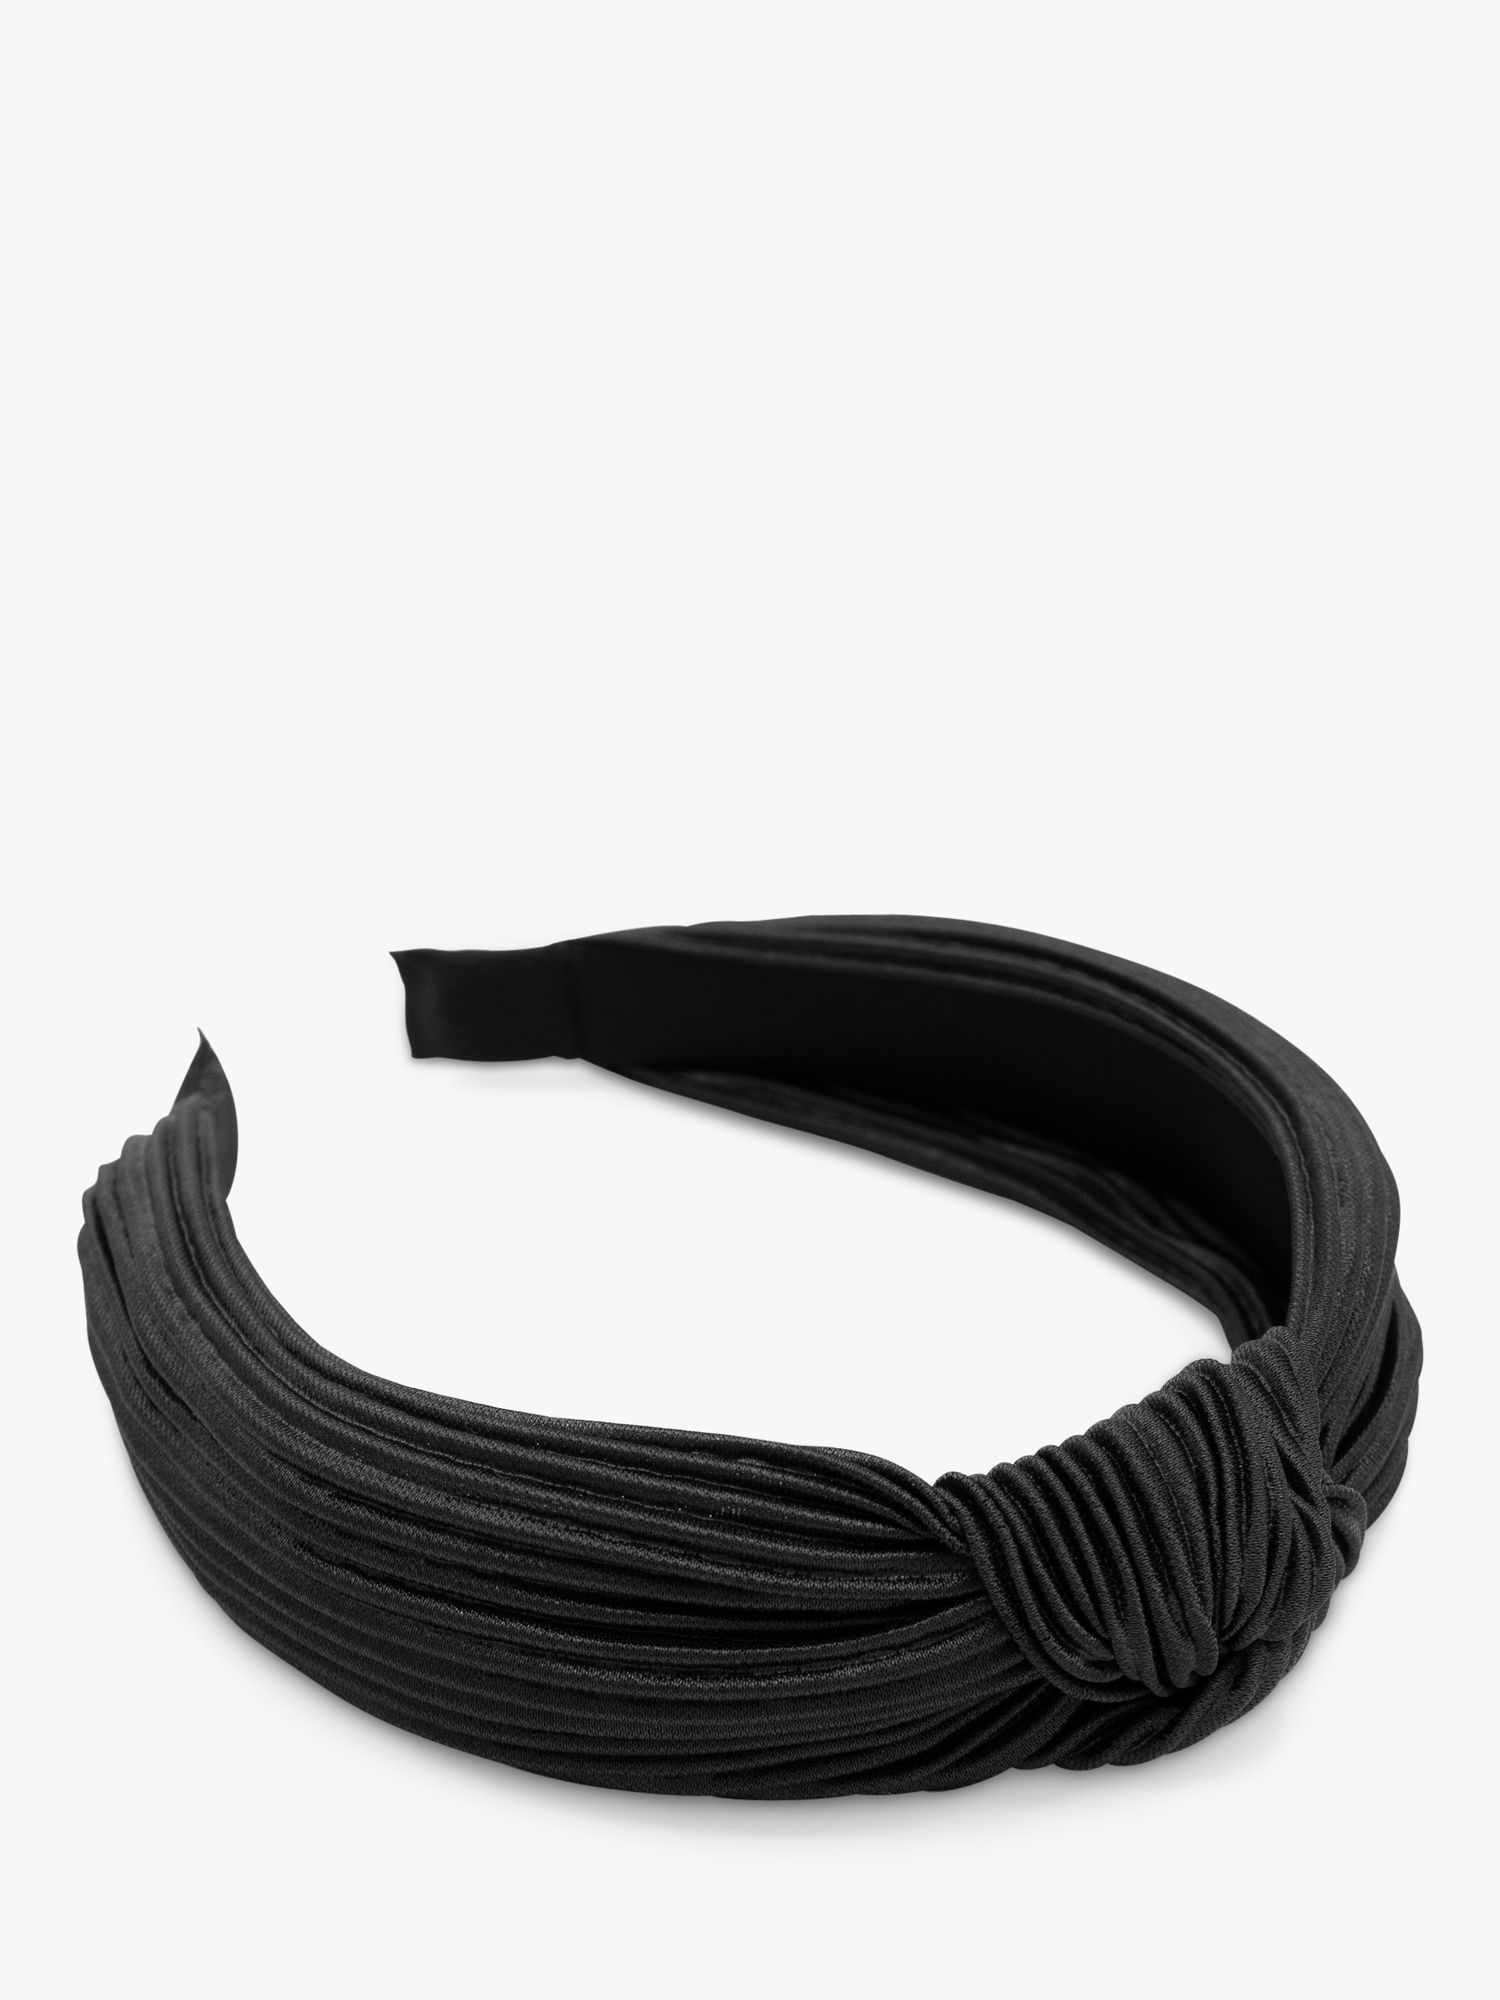 Bloom & Bay Lantic Knot Detail Pleated Headband, Black, One Size